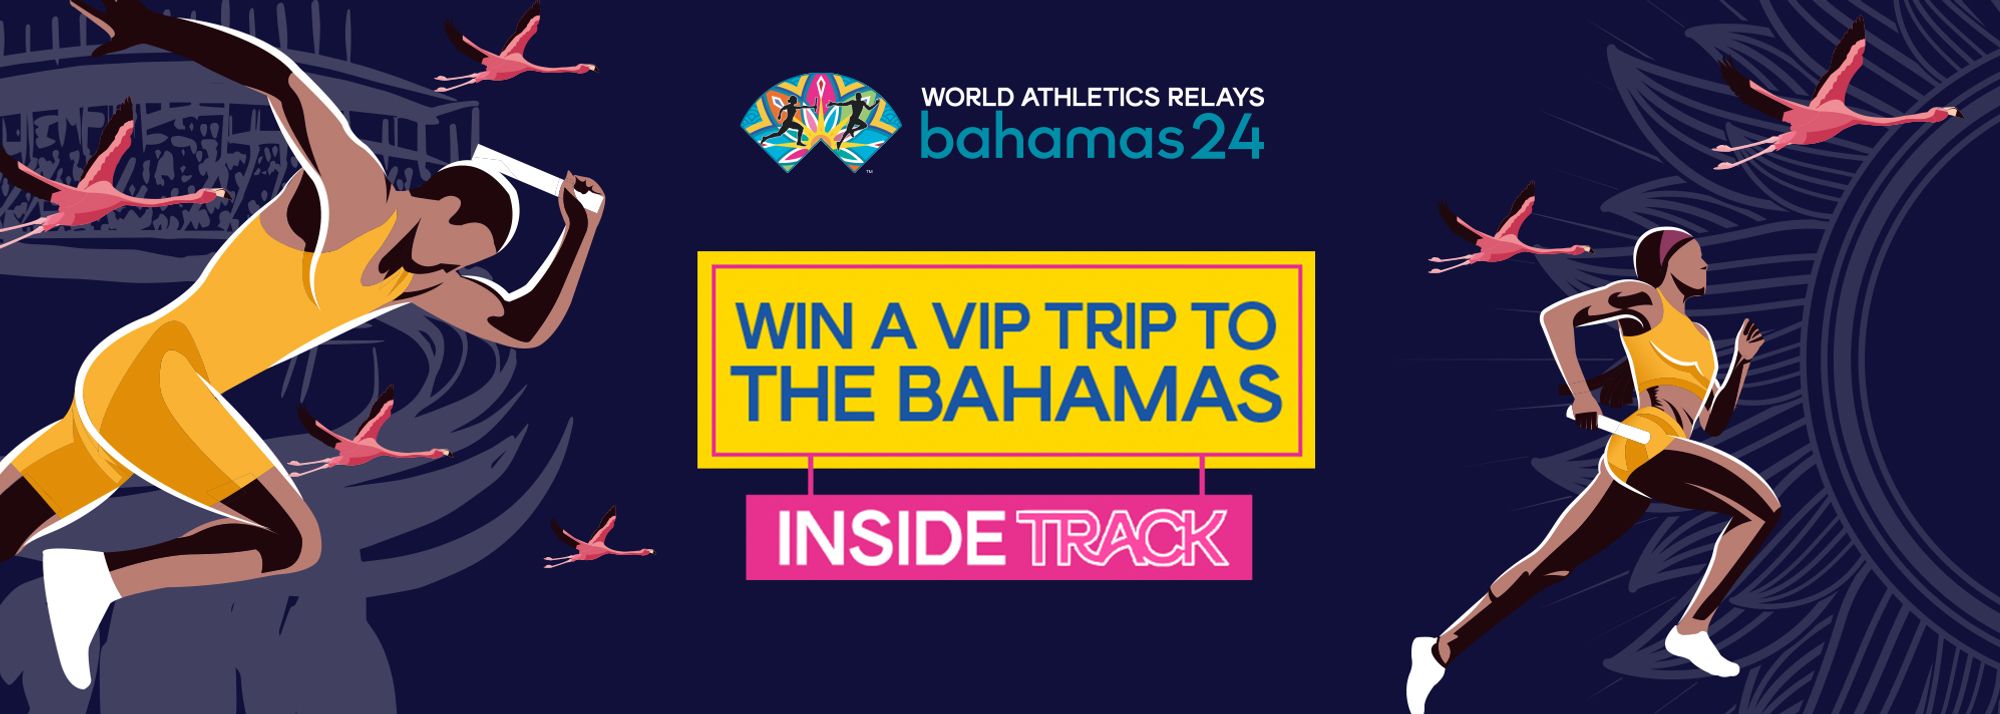 win a trip to bahamas